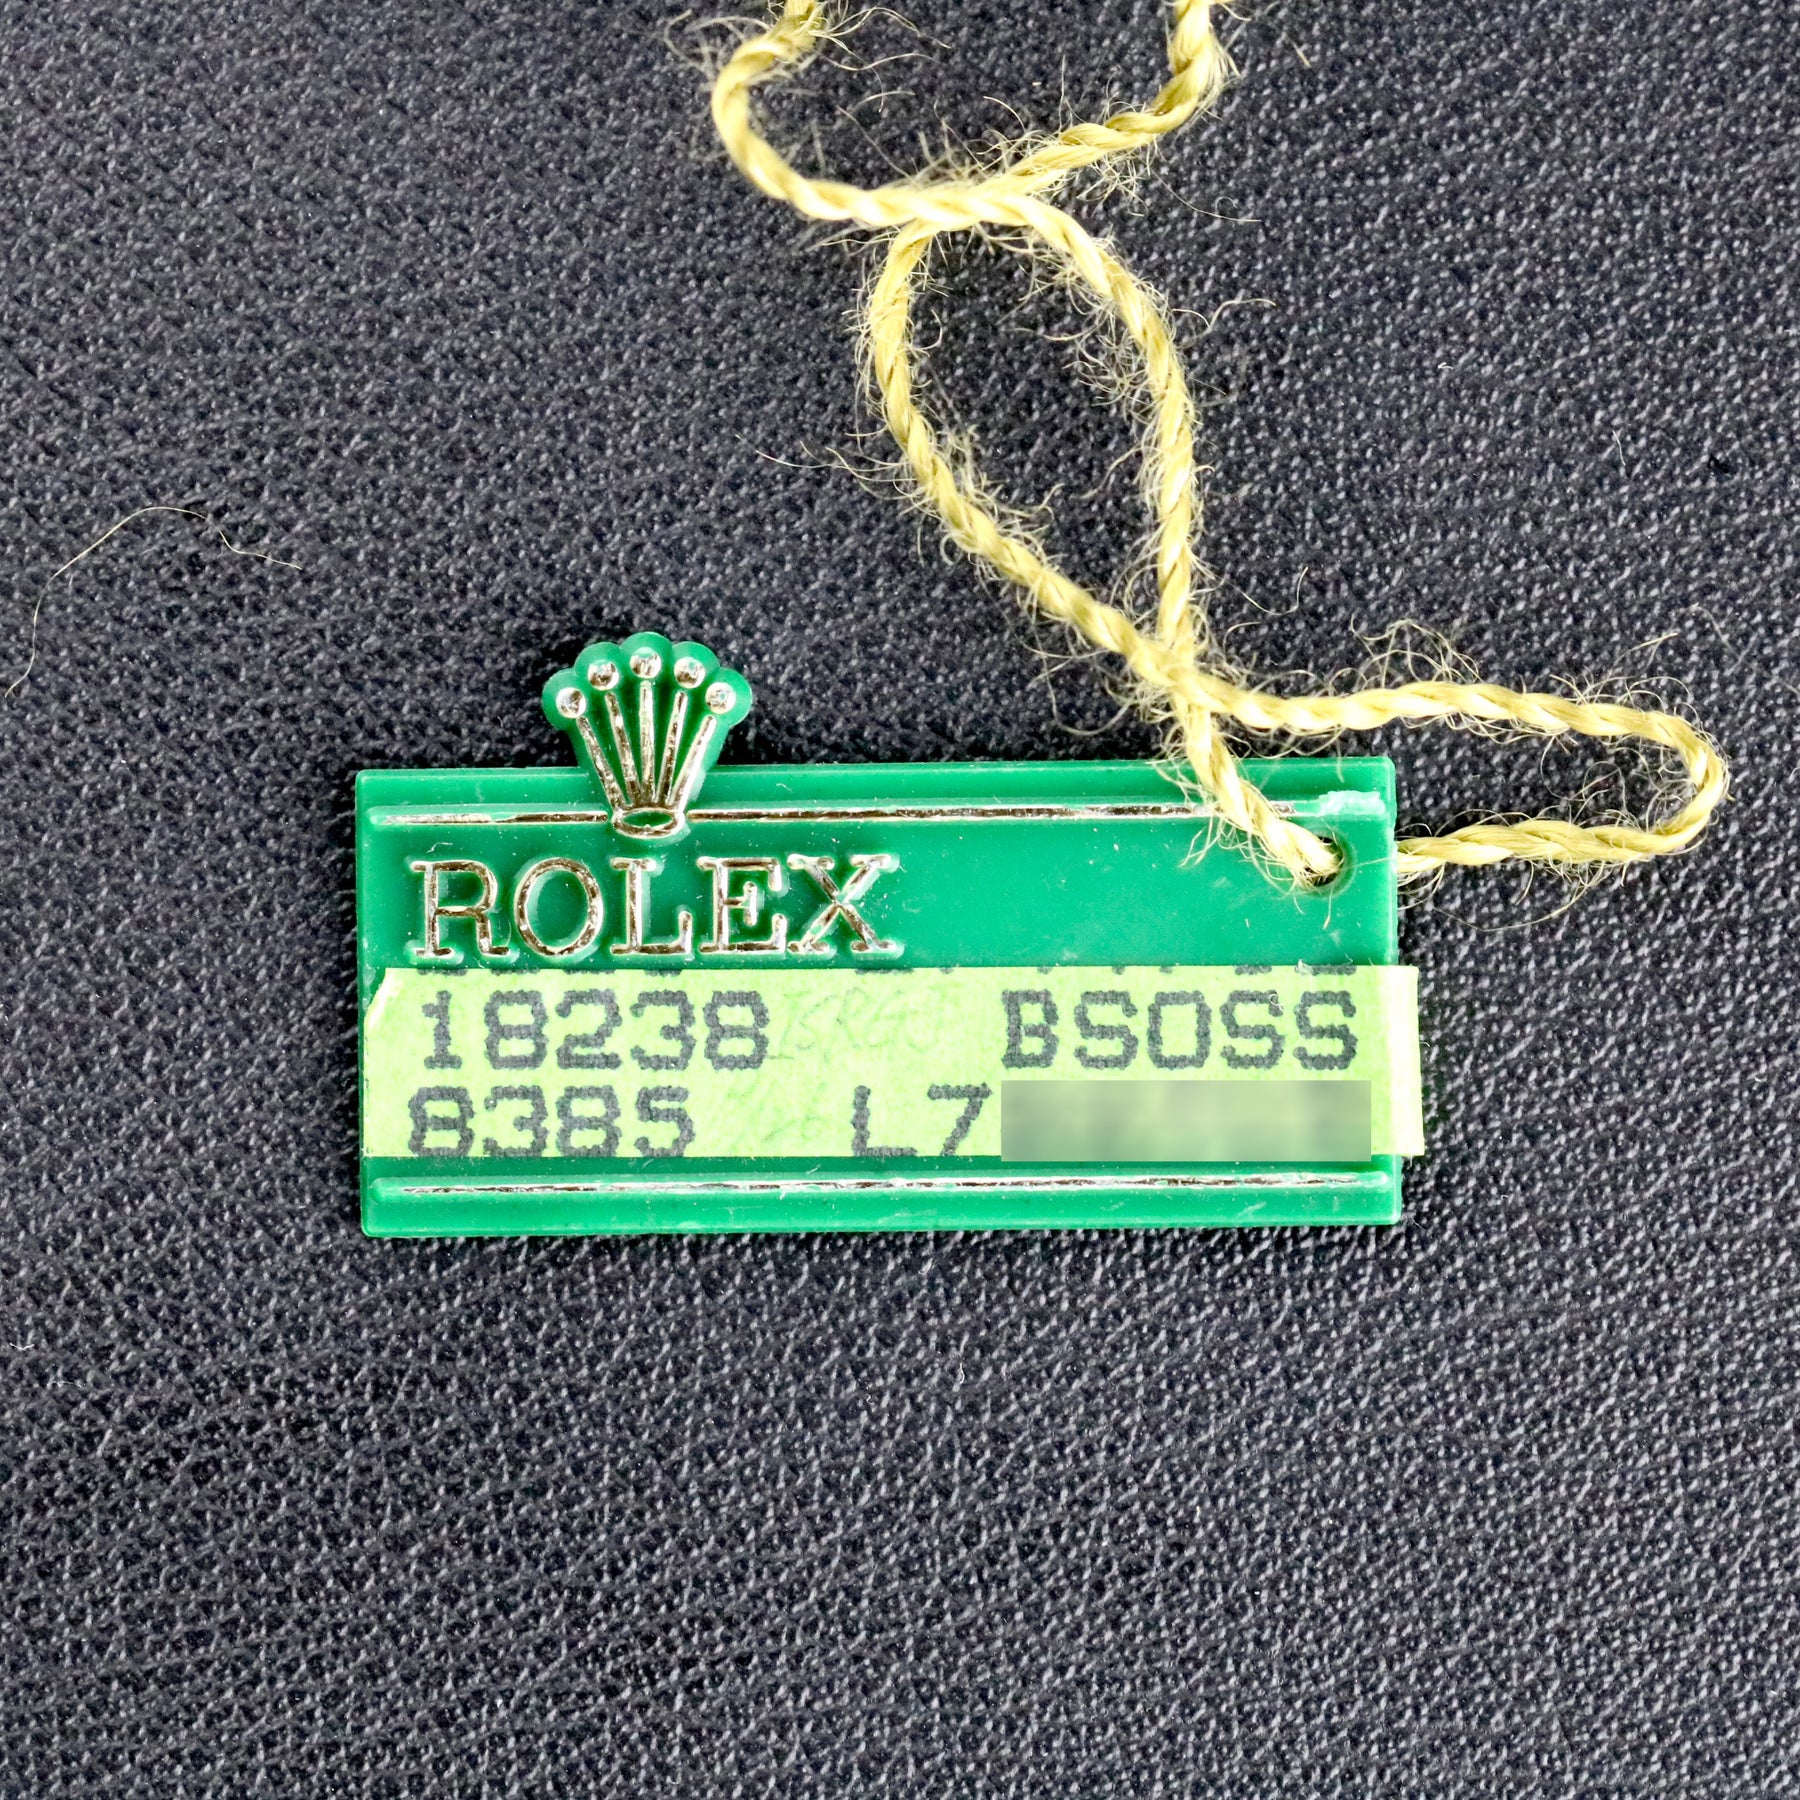 1989 Rolex 18238 Yellow Gold 36mm Daydate